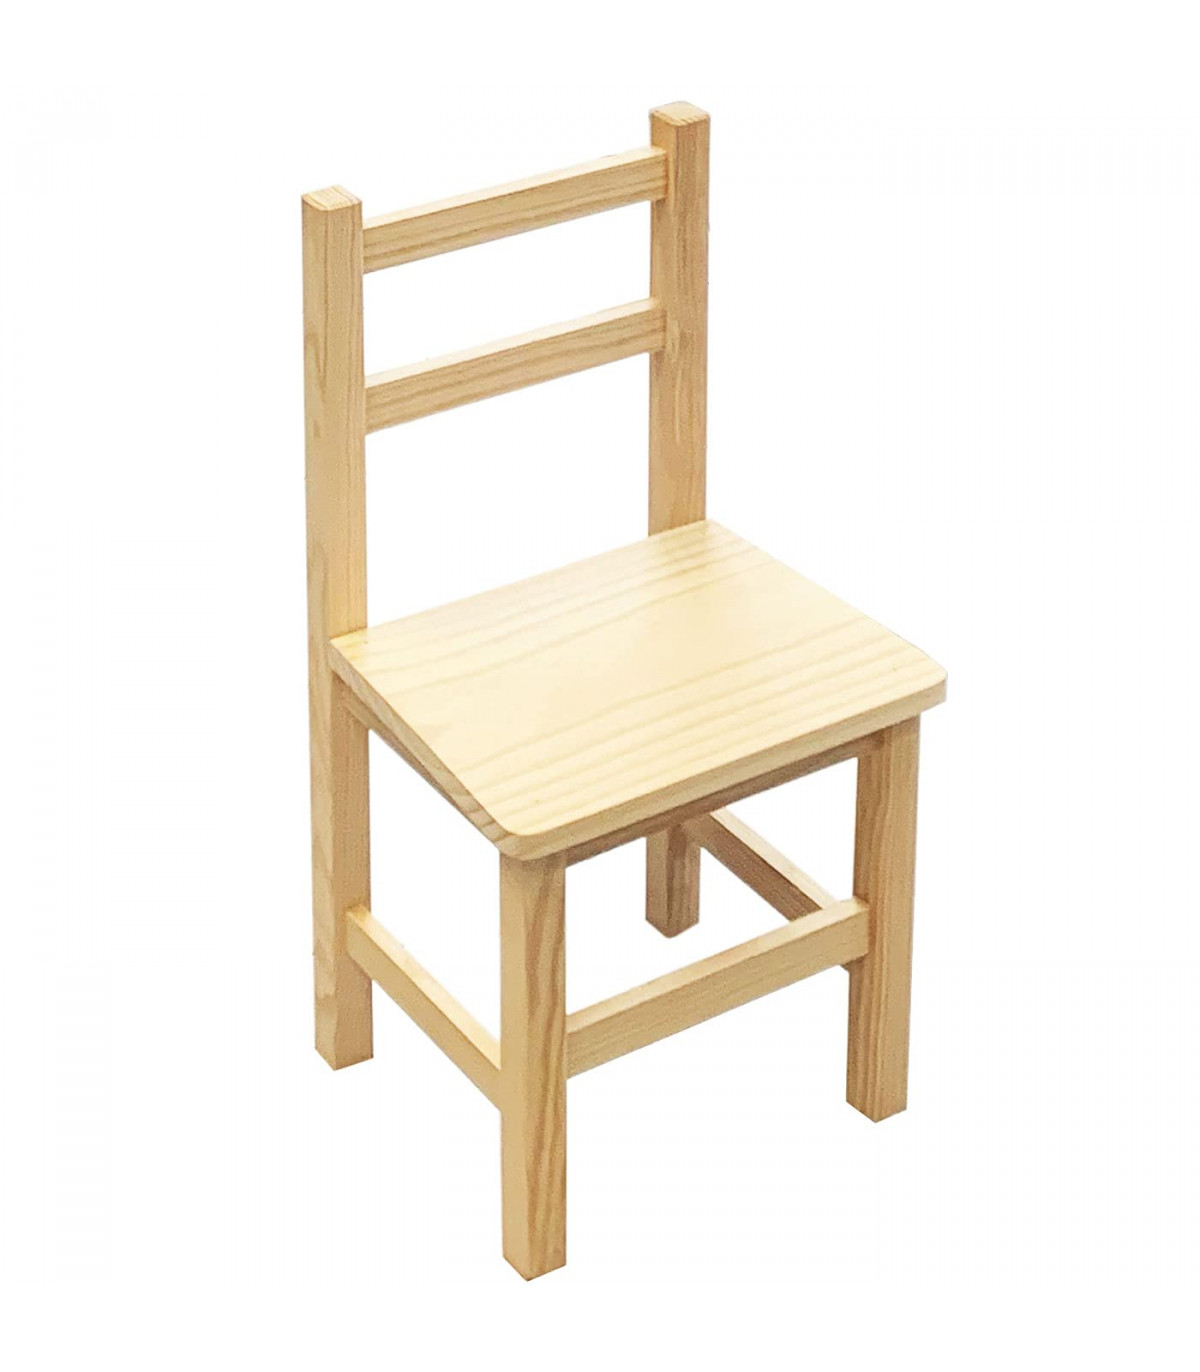 Tradineur - Silla infantil con respaldo recto, madera natural, altura del  asiento 21,2 cm, silla para niños con reposapiés, 39,3